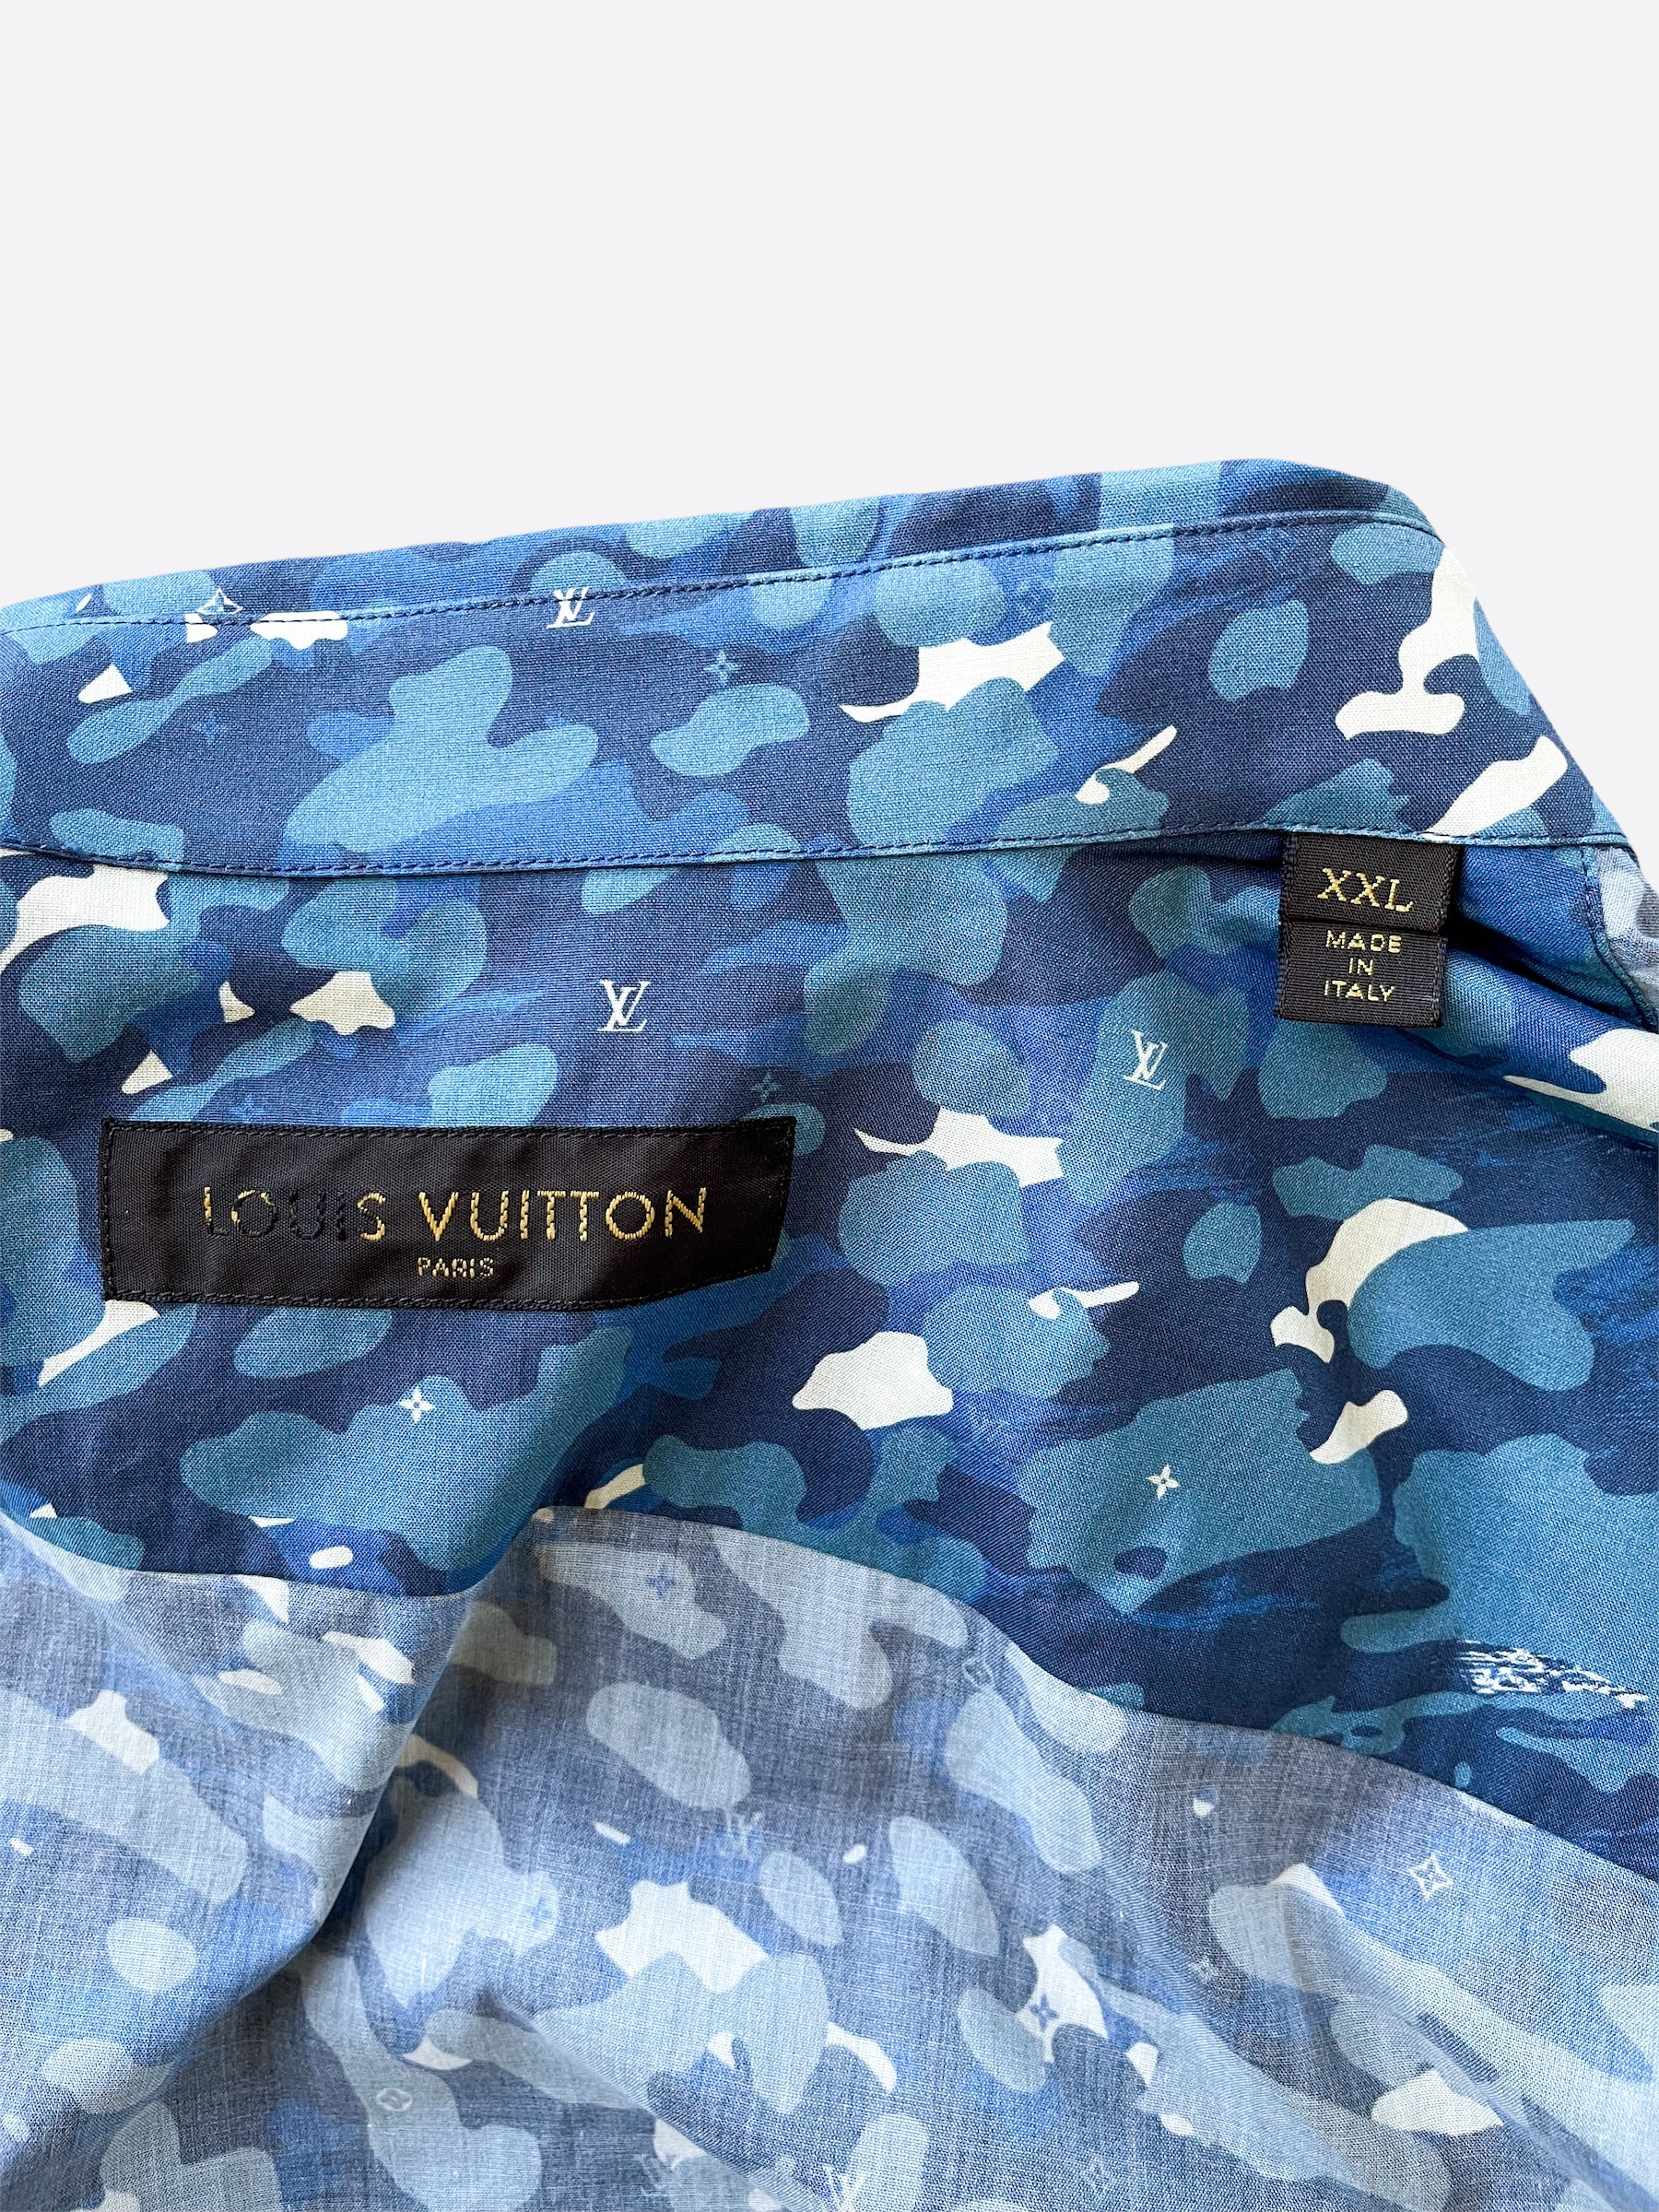 Louis Vuitton Blue Camo Button Up Shirt